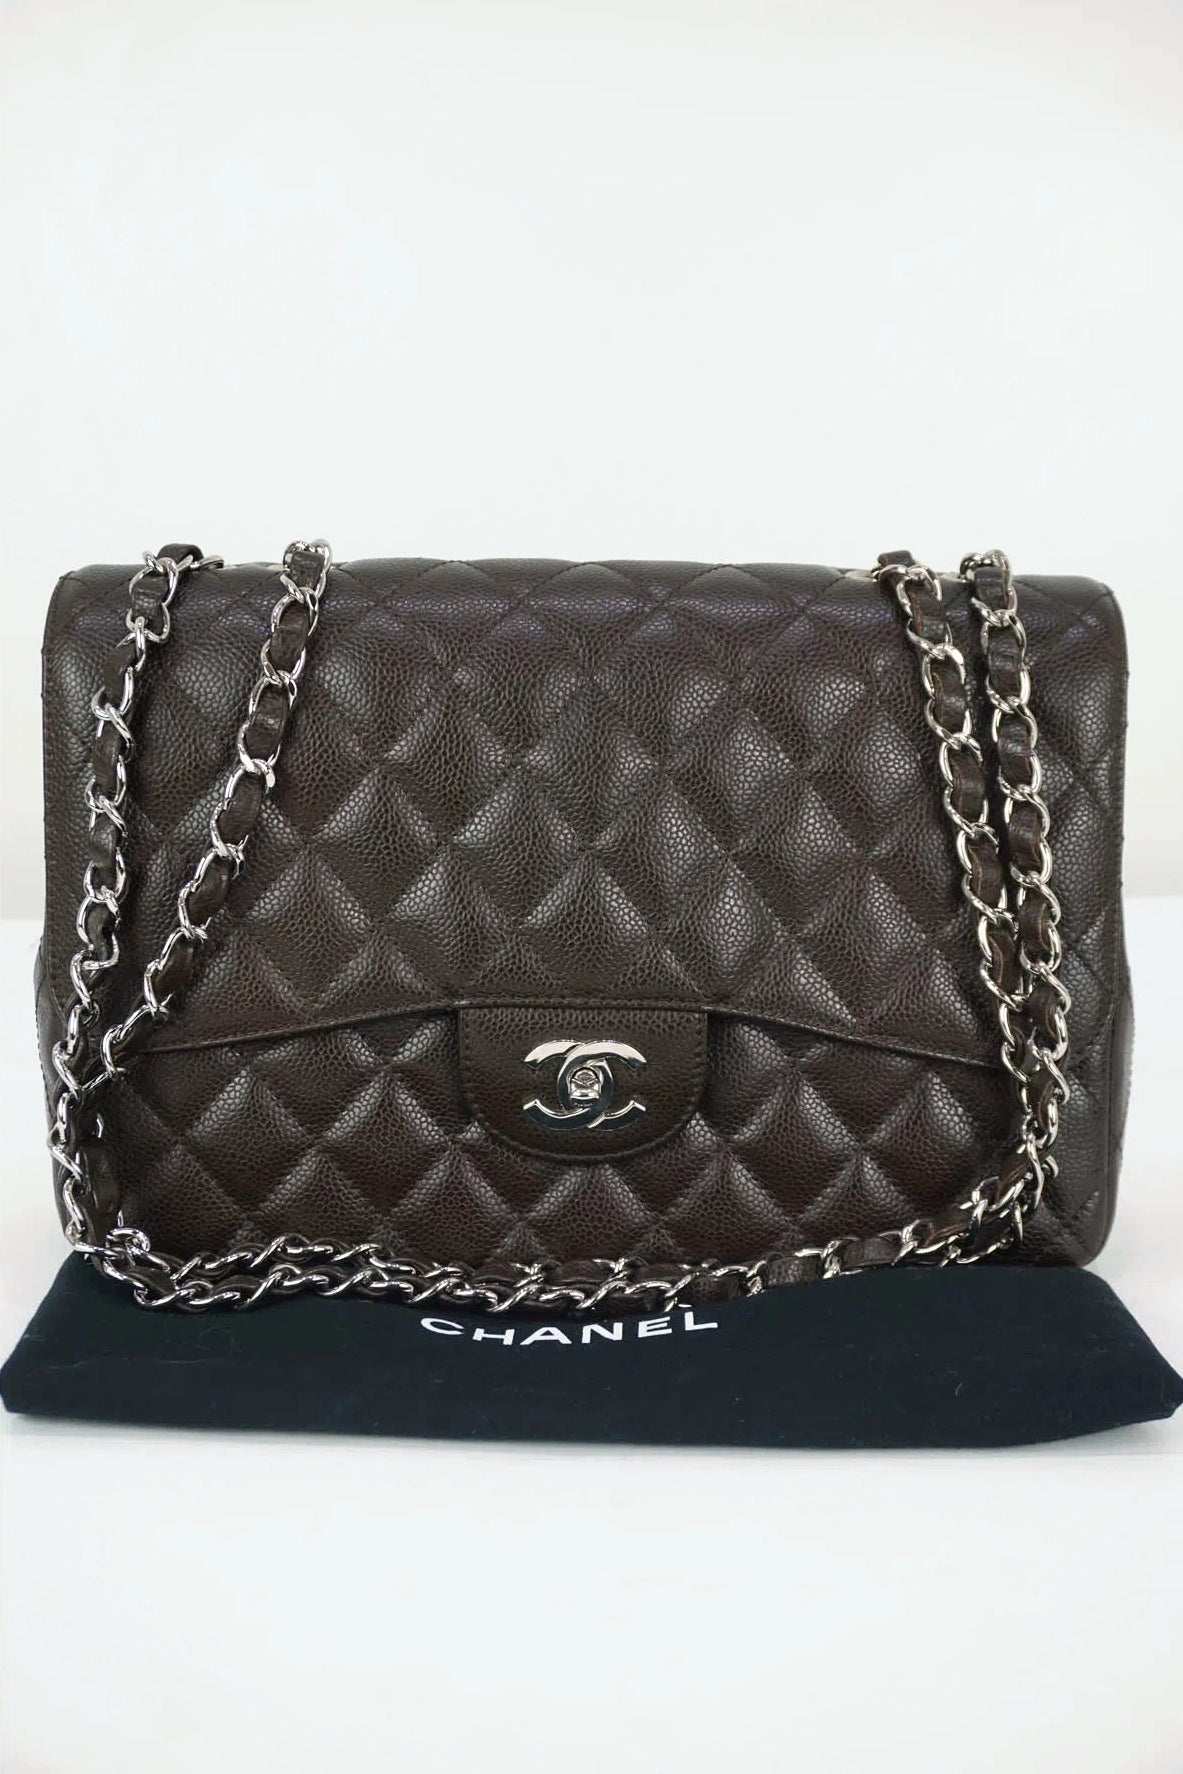 Chanel Brown Caviar Jumbo Single Flap Purse SHW 2005-6